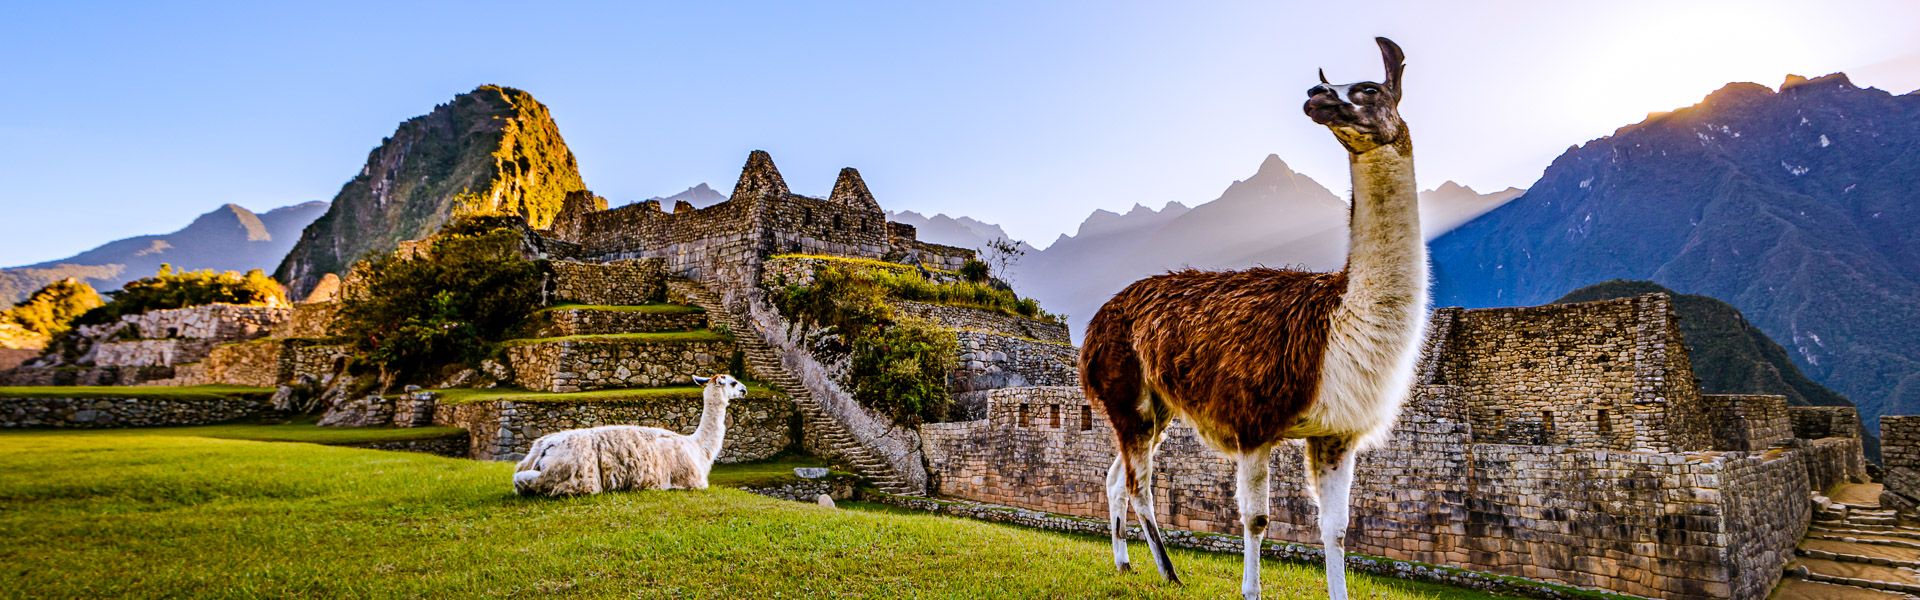 Lamas beim Sonnenaufgang in Machu Picchu |  OGphoto, iStockphoto.com / Chamleon